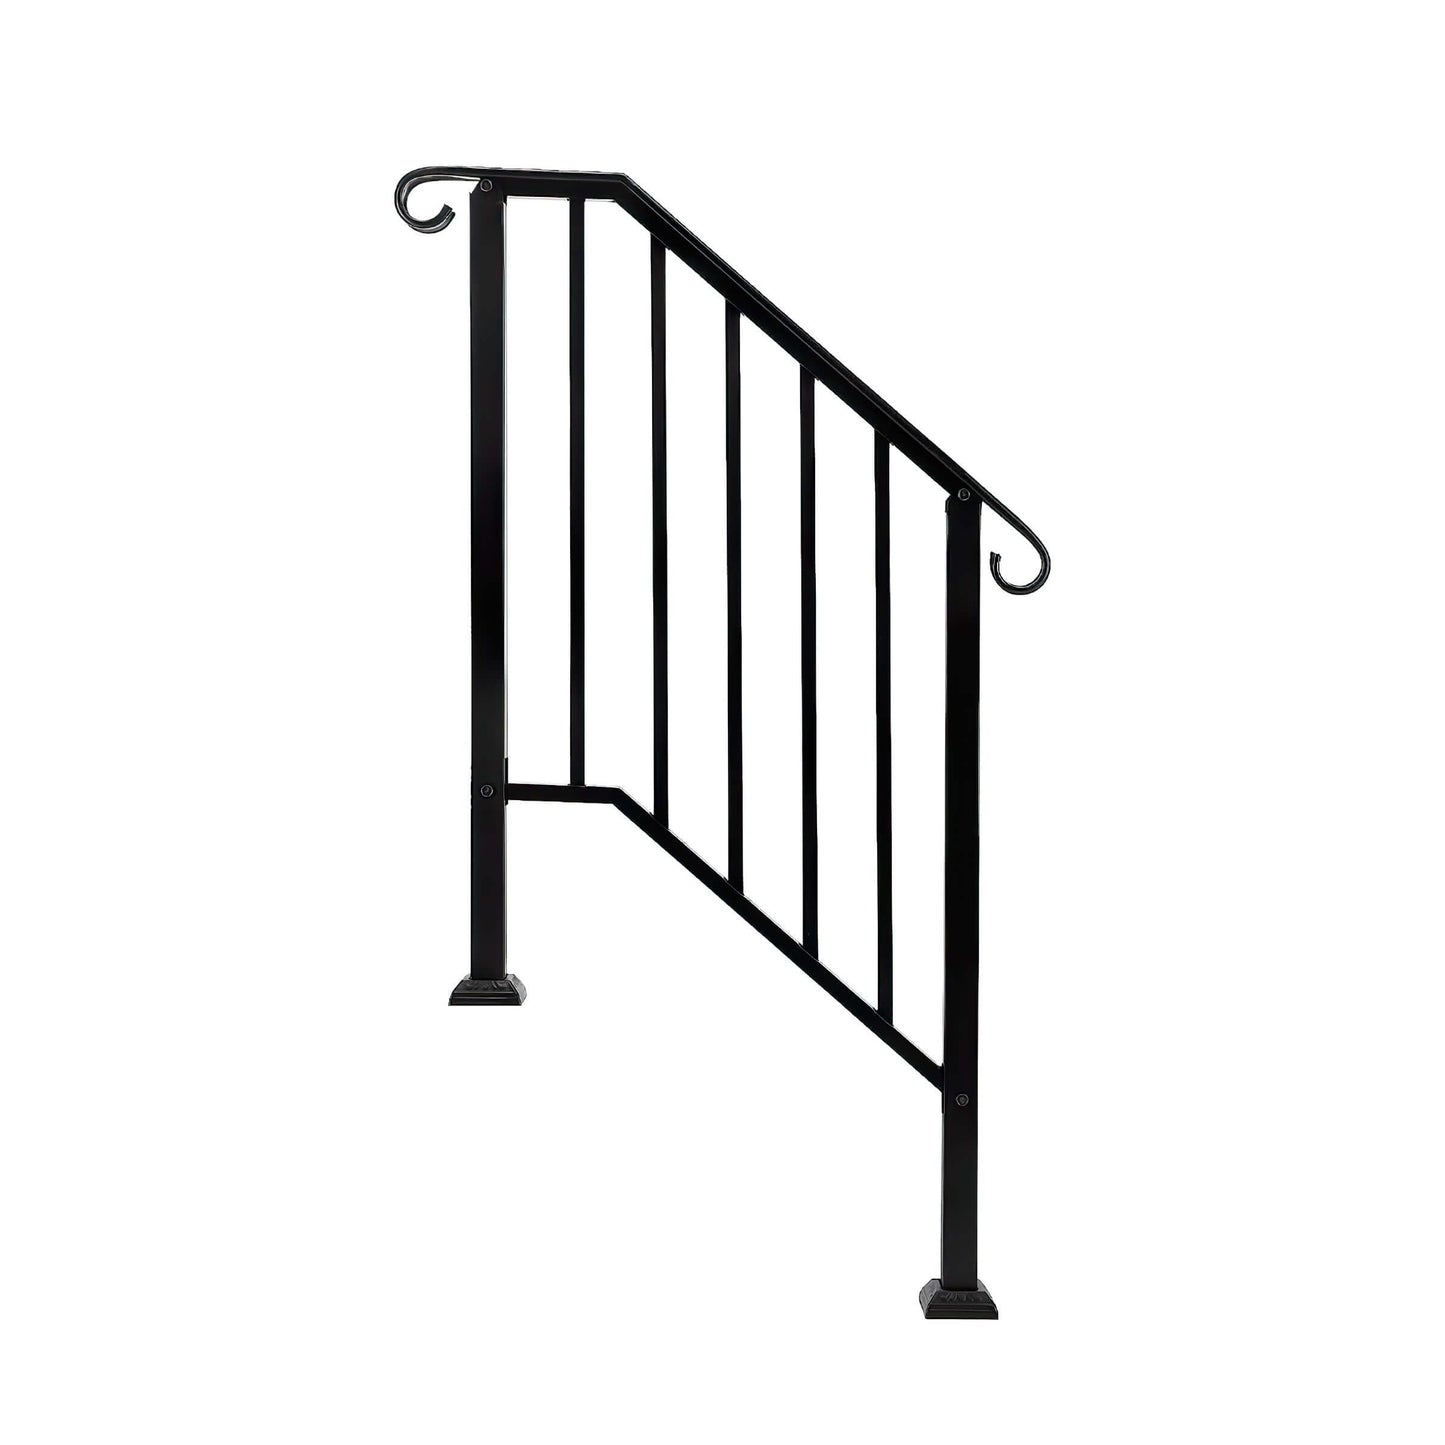 2-3 Steps Premium Outdoor Stair Railing, Black Iron Hand Rails For Concrete Steps